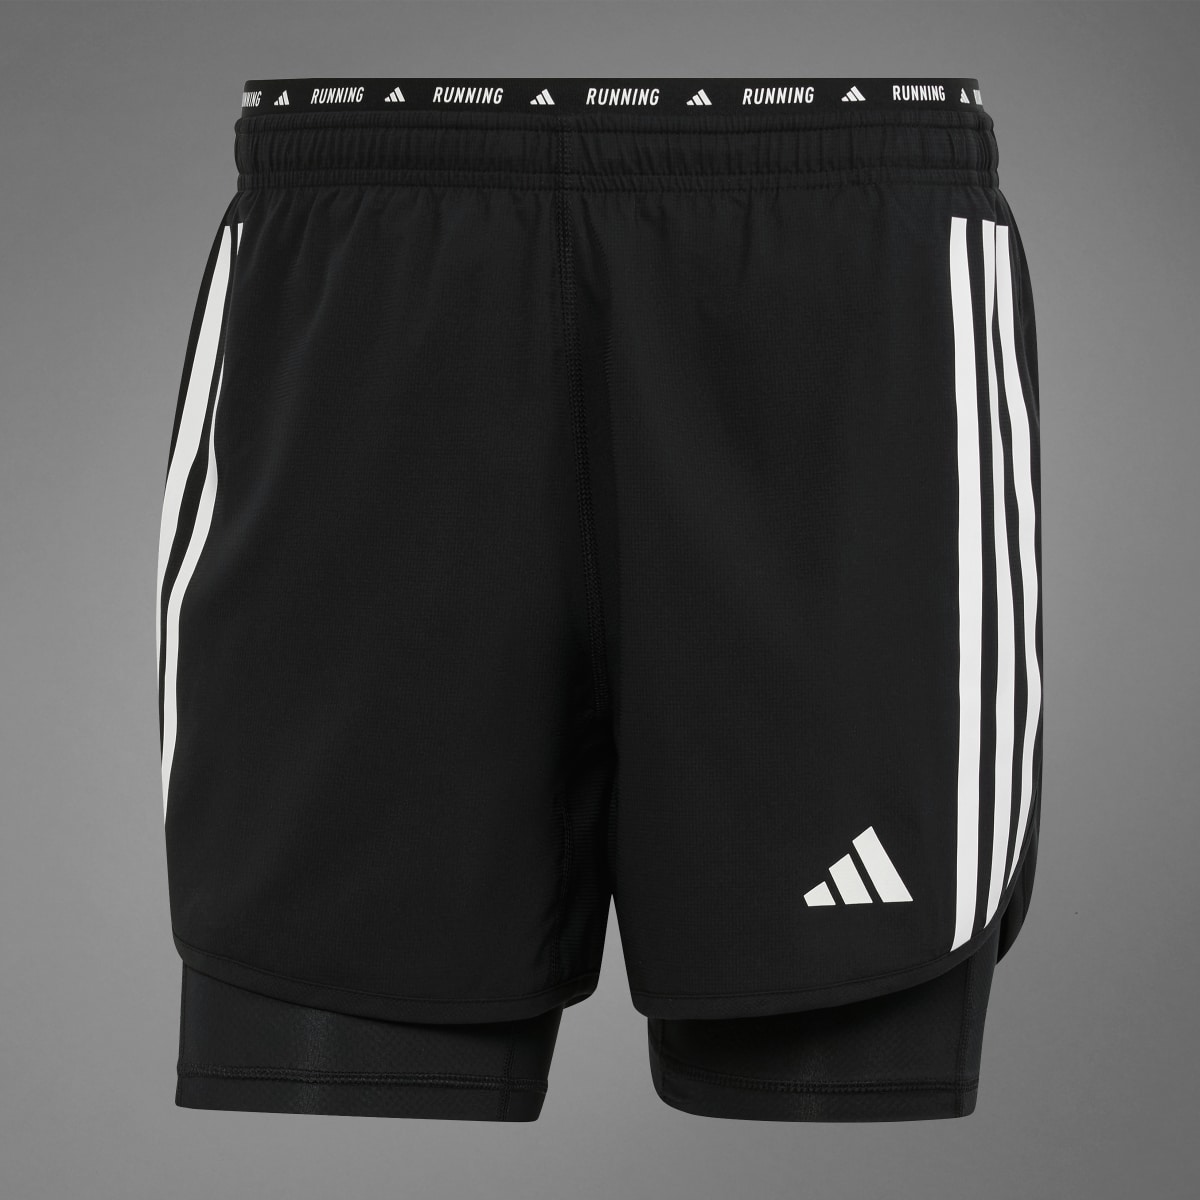 Adidas Own the Run 3-Stripes 2-in-1 Shorts. 9